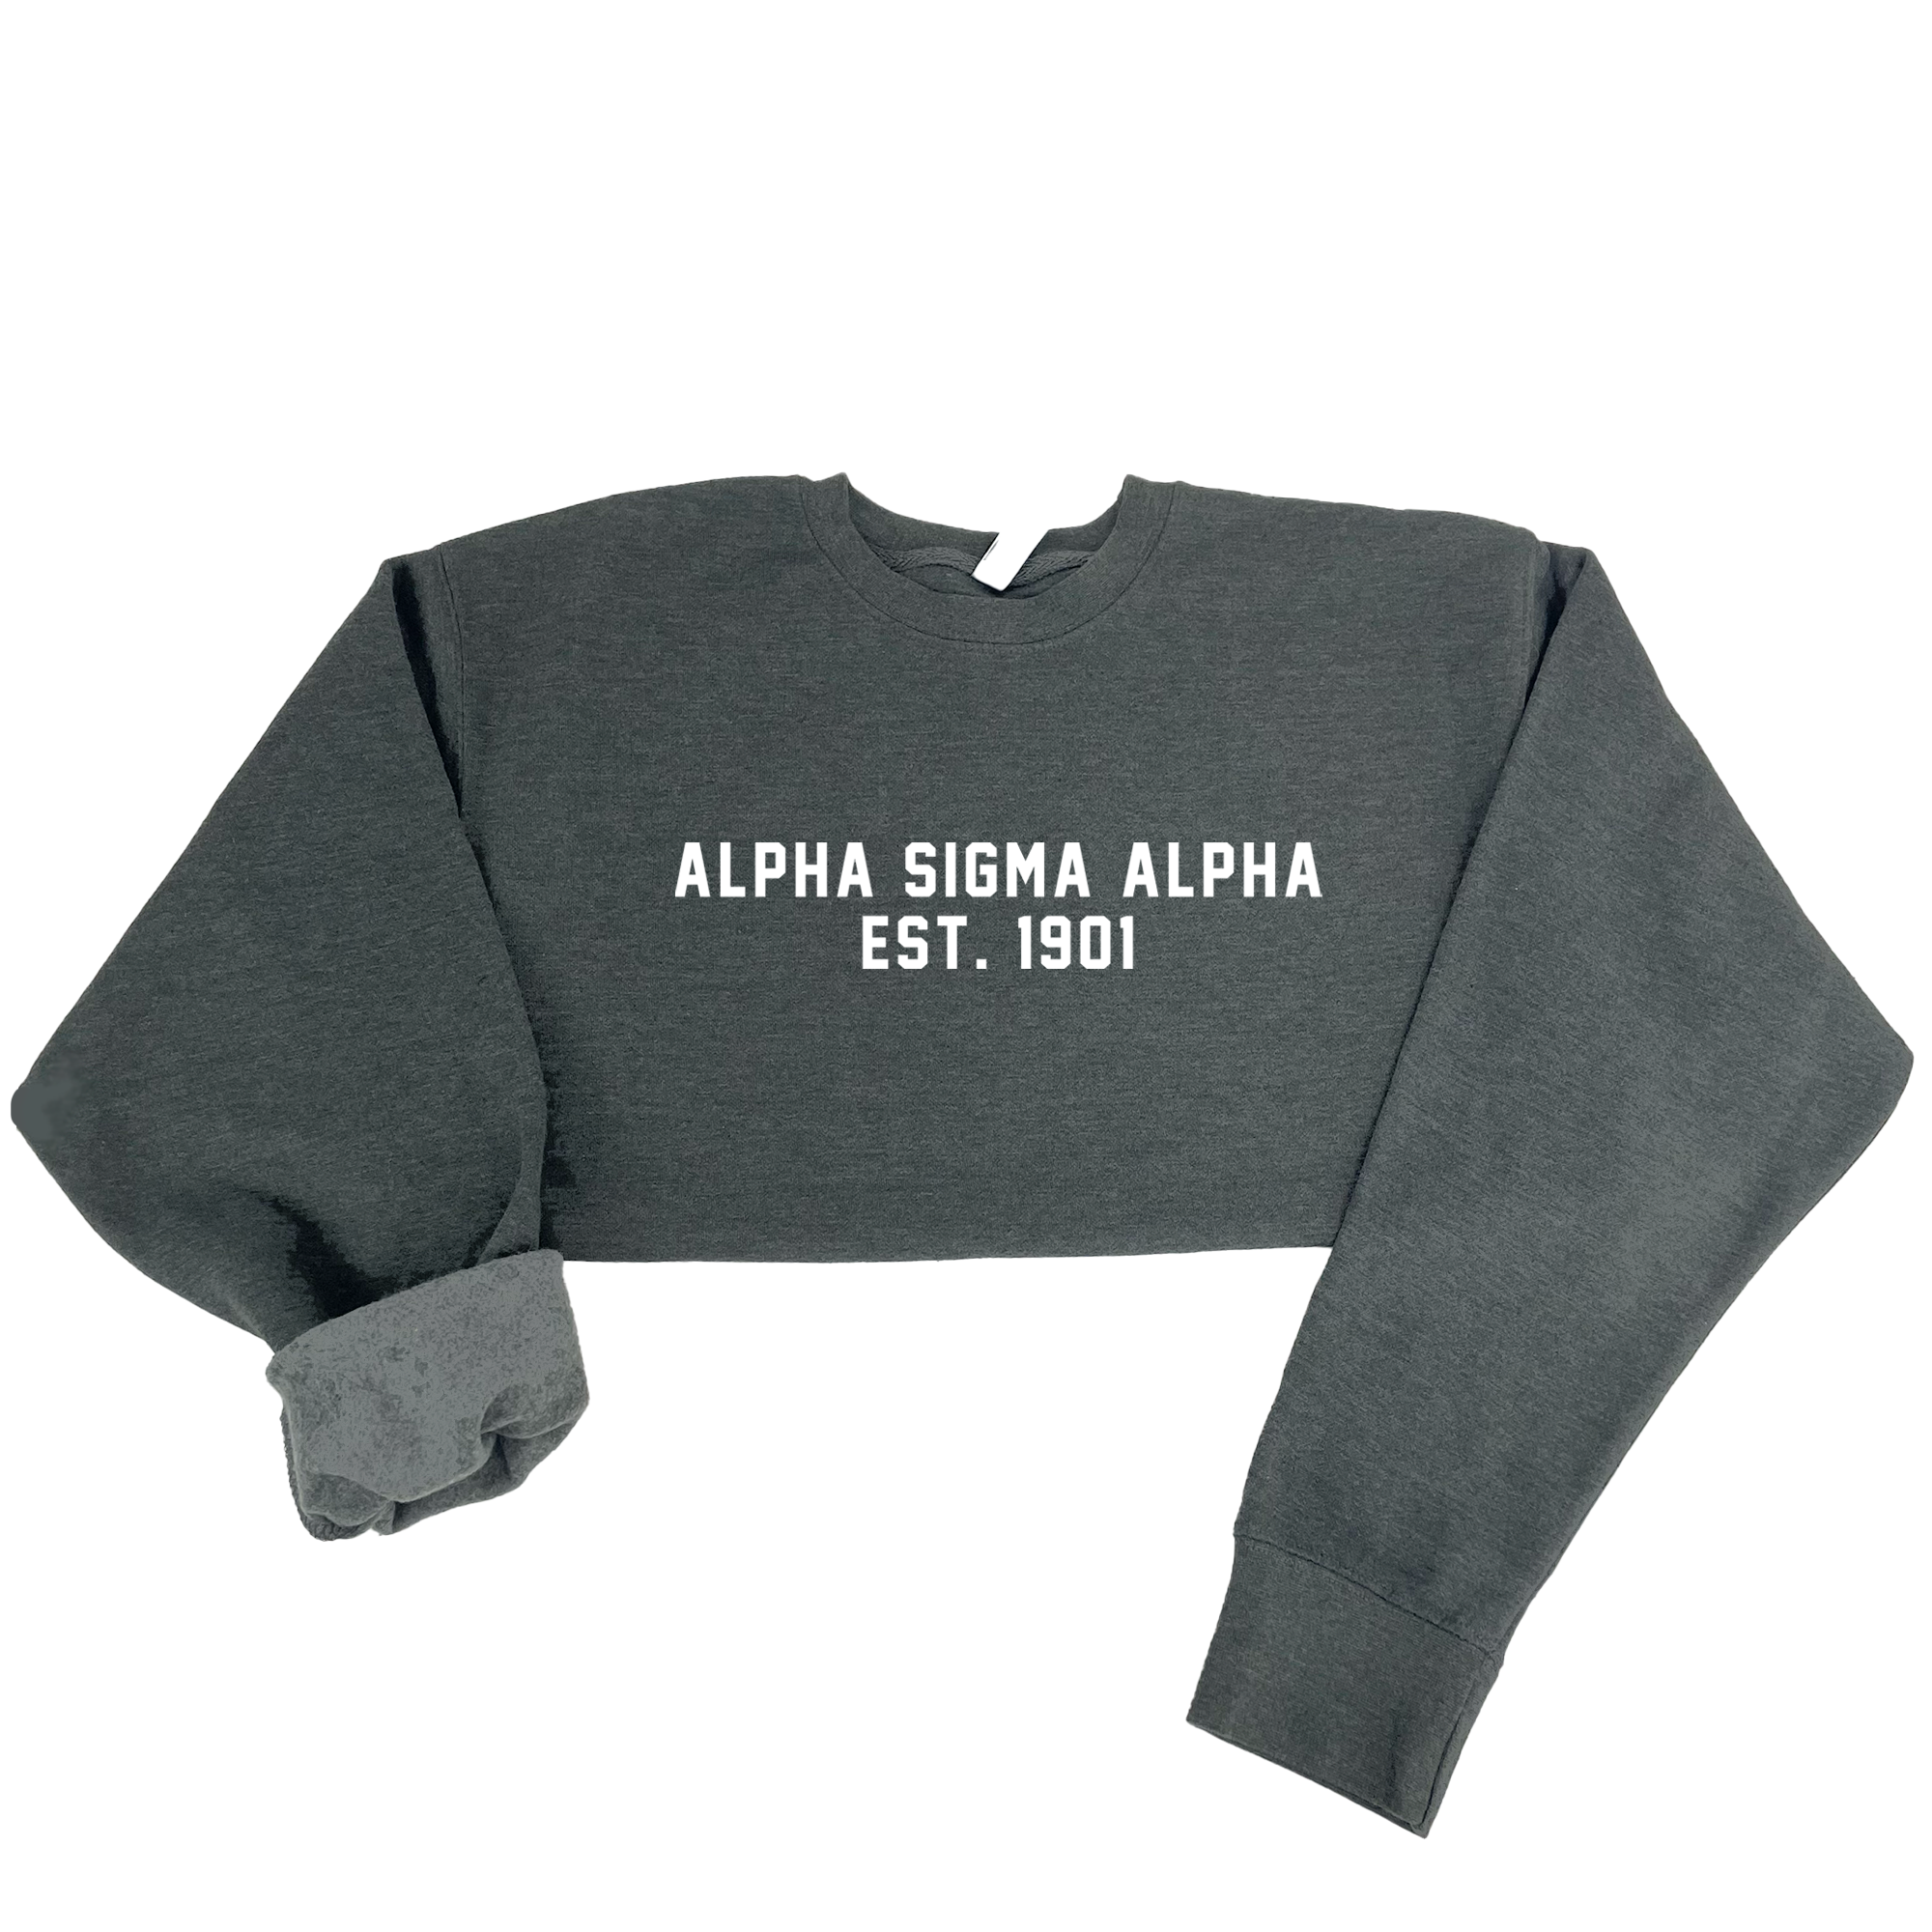 Alpha Sigma Alpha Est. 1901 Sweatshirt